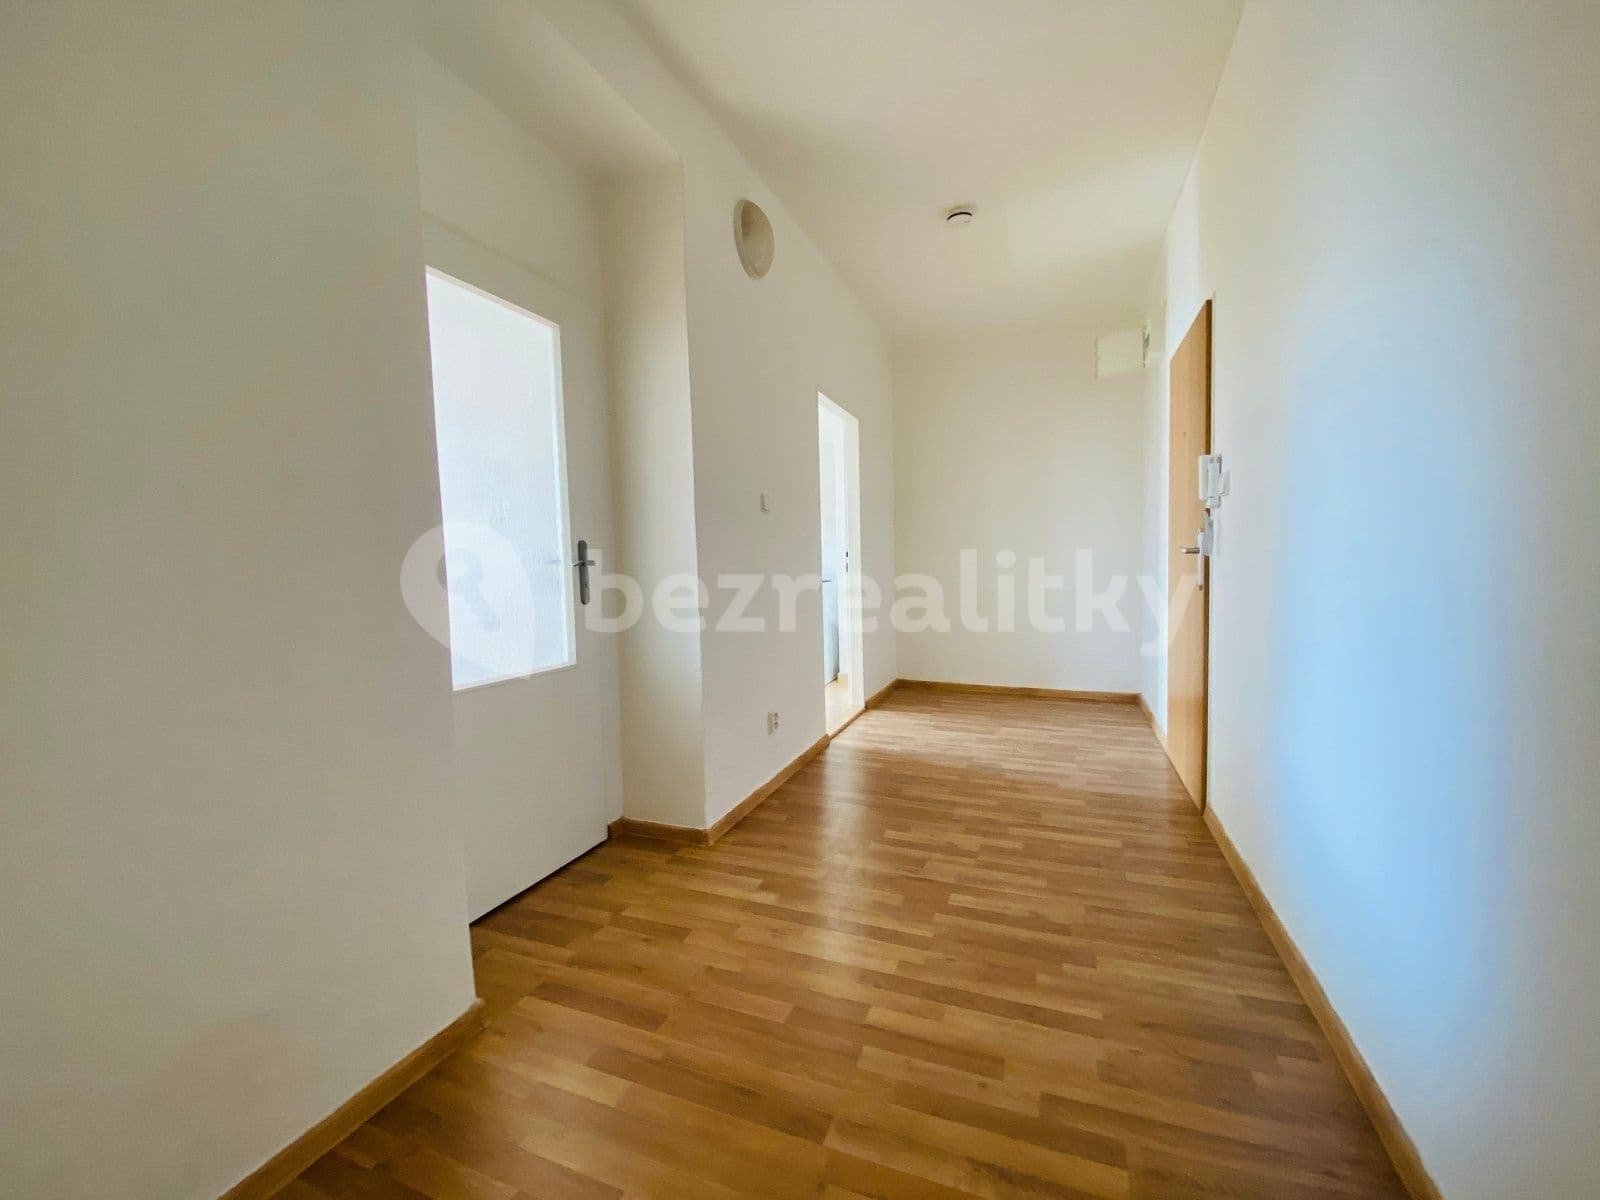 2 bedroom flat to rent, 56 m², 17. listopadu, Ostrava, Moravskoslezský Region